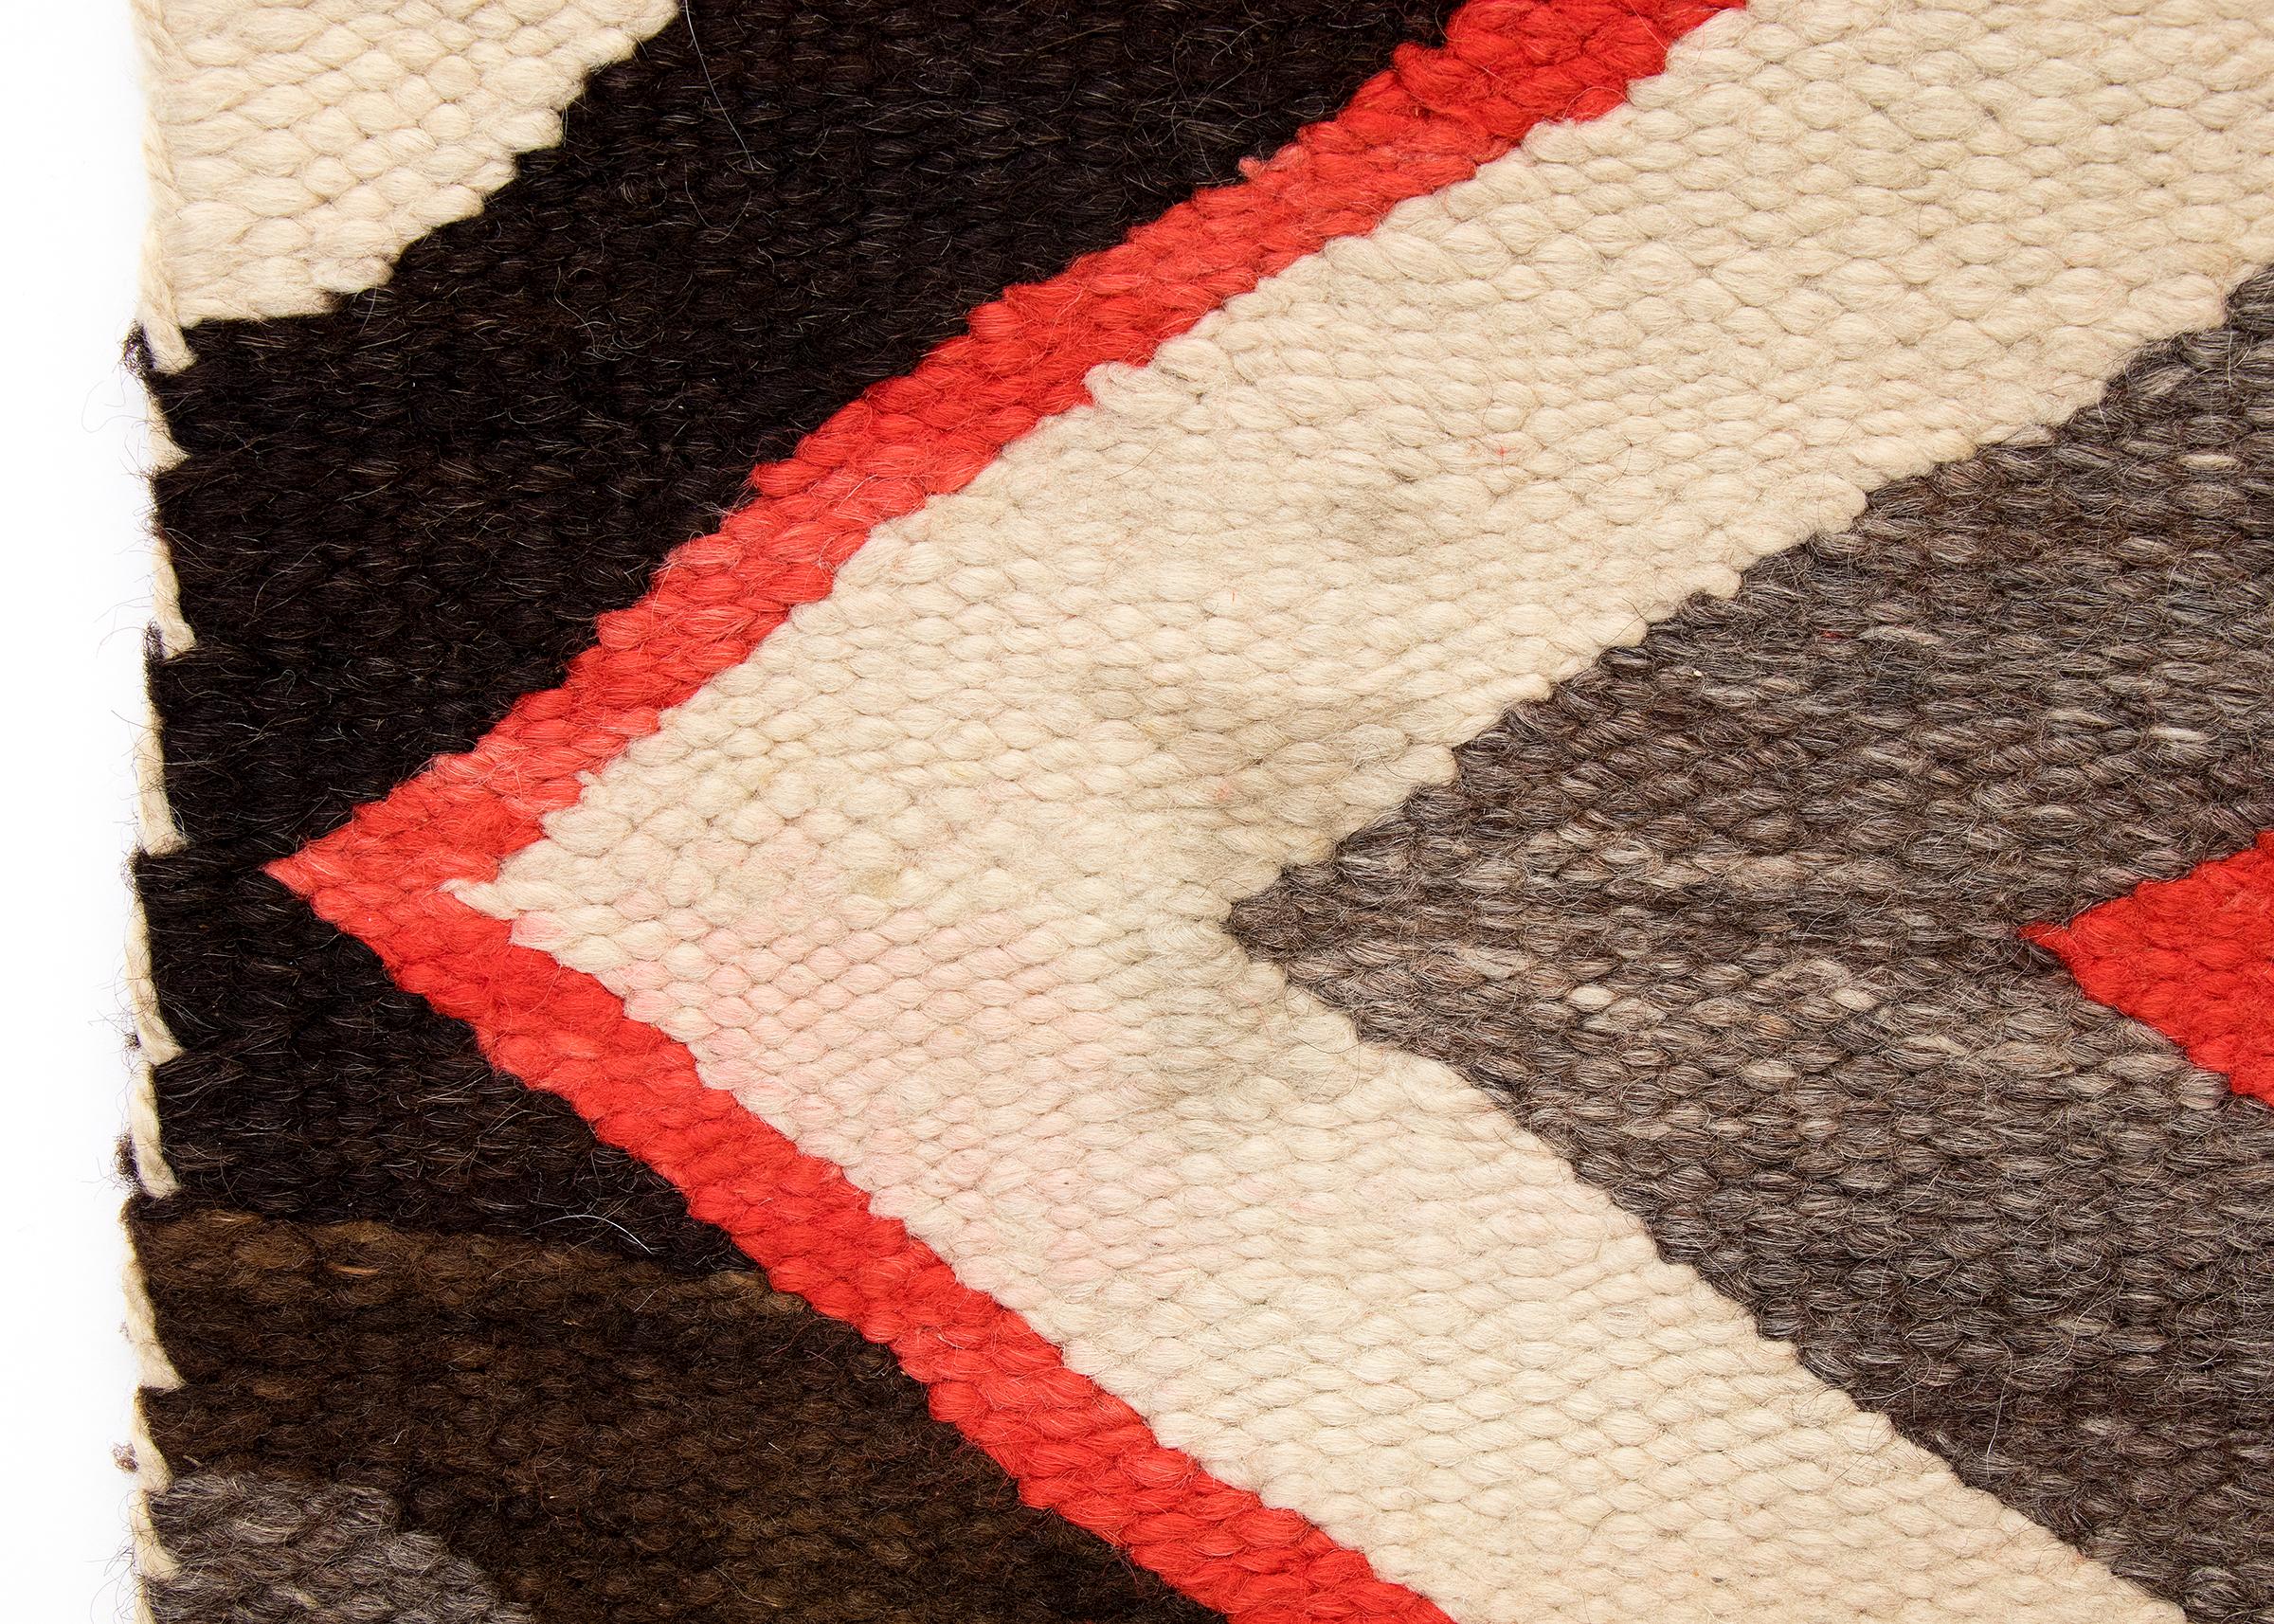 American Vintage Navajo Rug, Trading Post Era Southwestern Weaving, Red Brown Black White For Sale